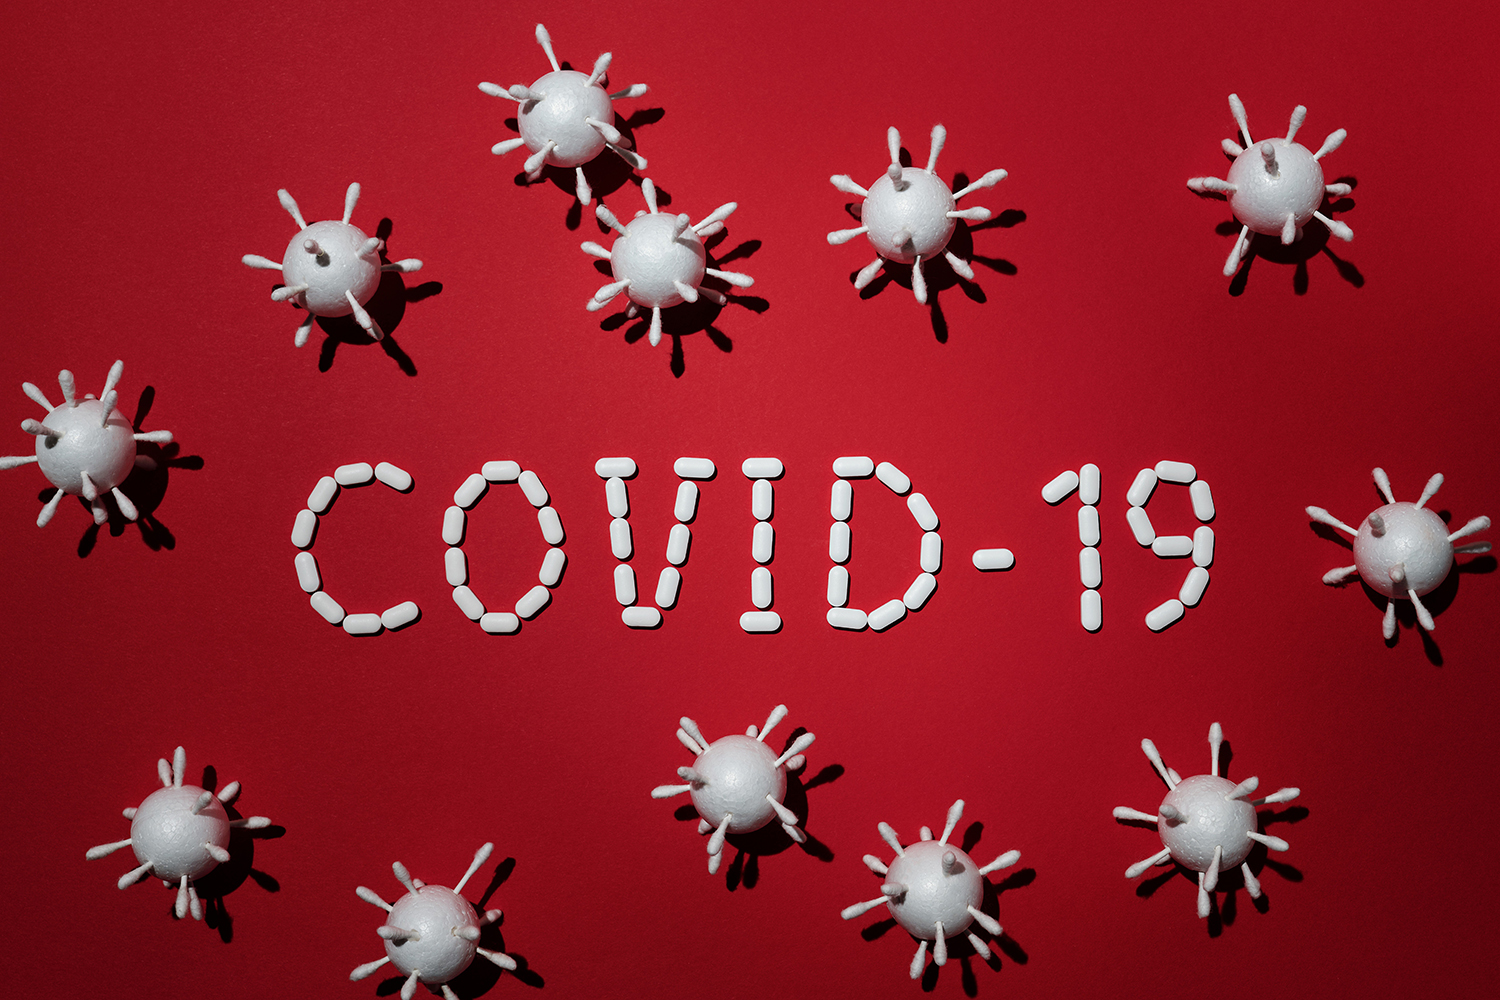 Covid 19 Scam alerts